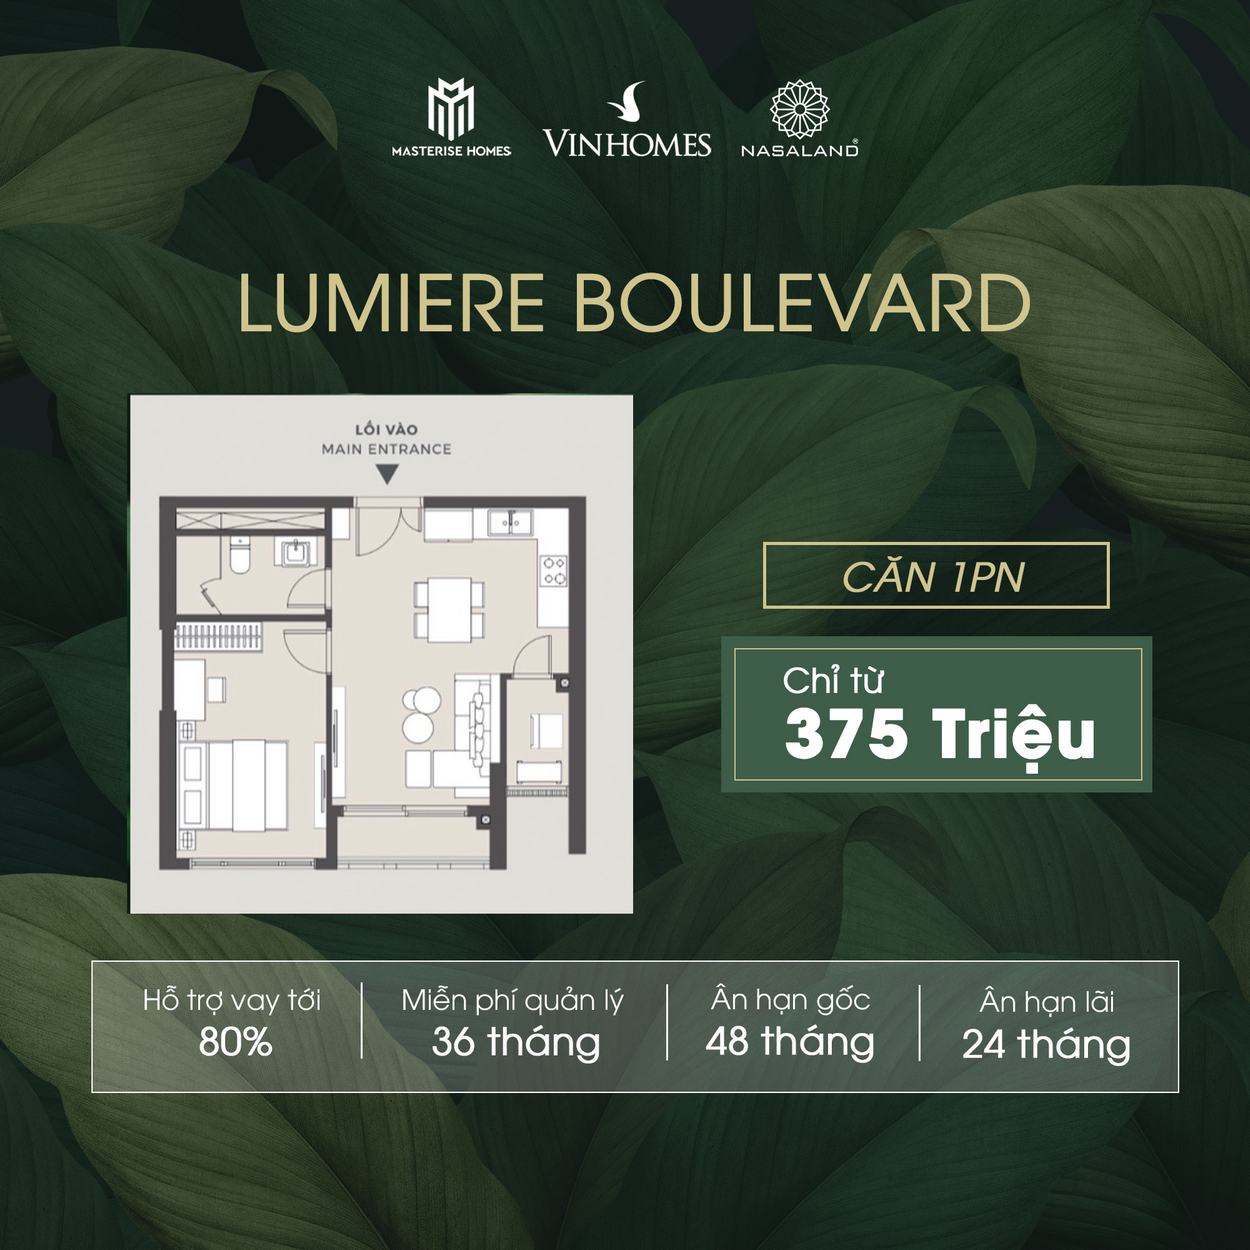 Giá bán Lumiere Boulevard - Căn hộ 1PN